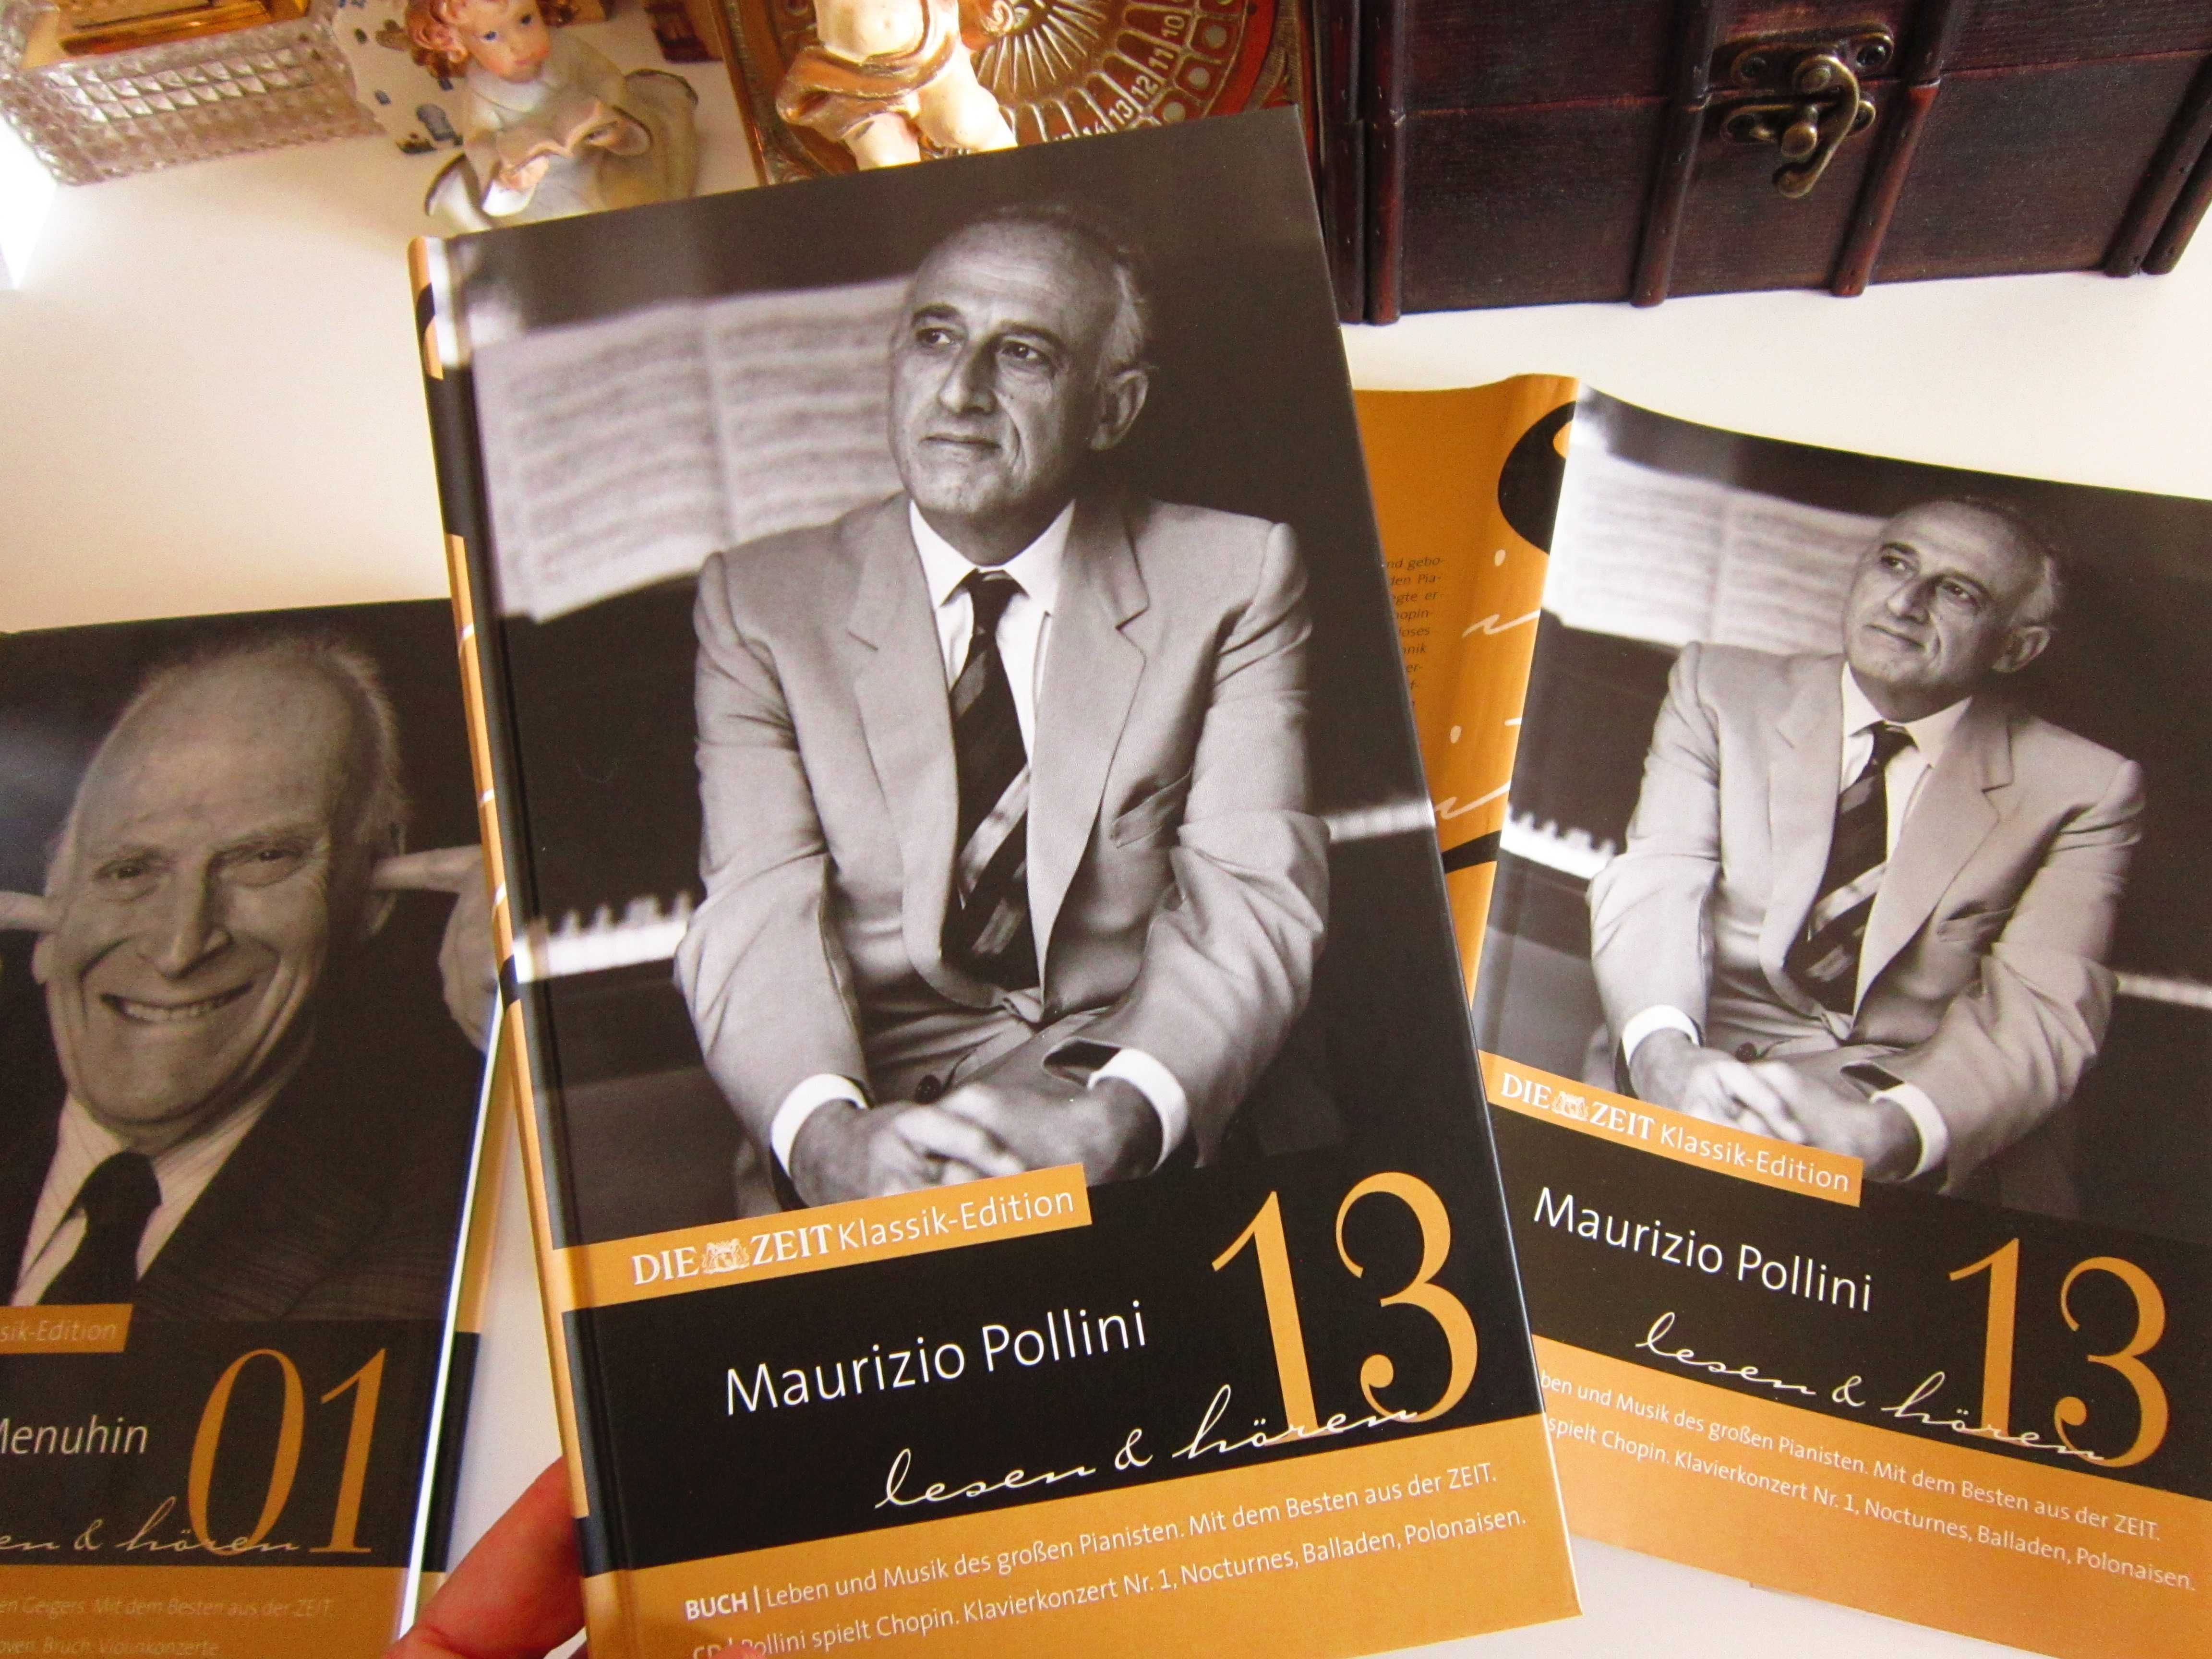 cd+carte pian Maurizio Pollini -Chopin Nocturne,Ballads,Polonaise etc